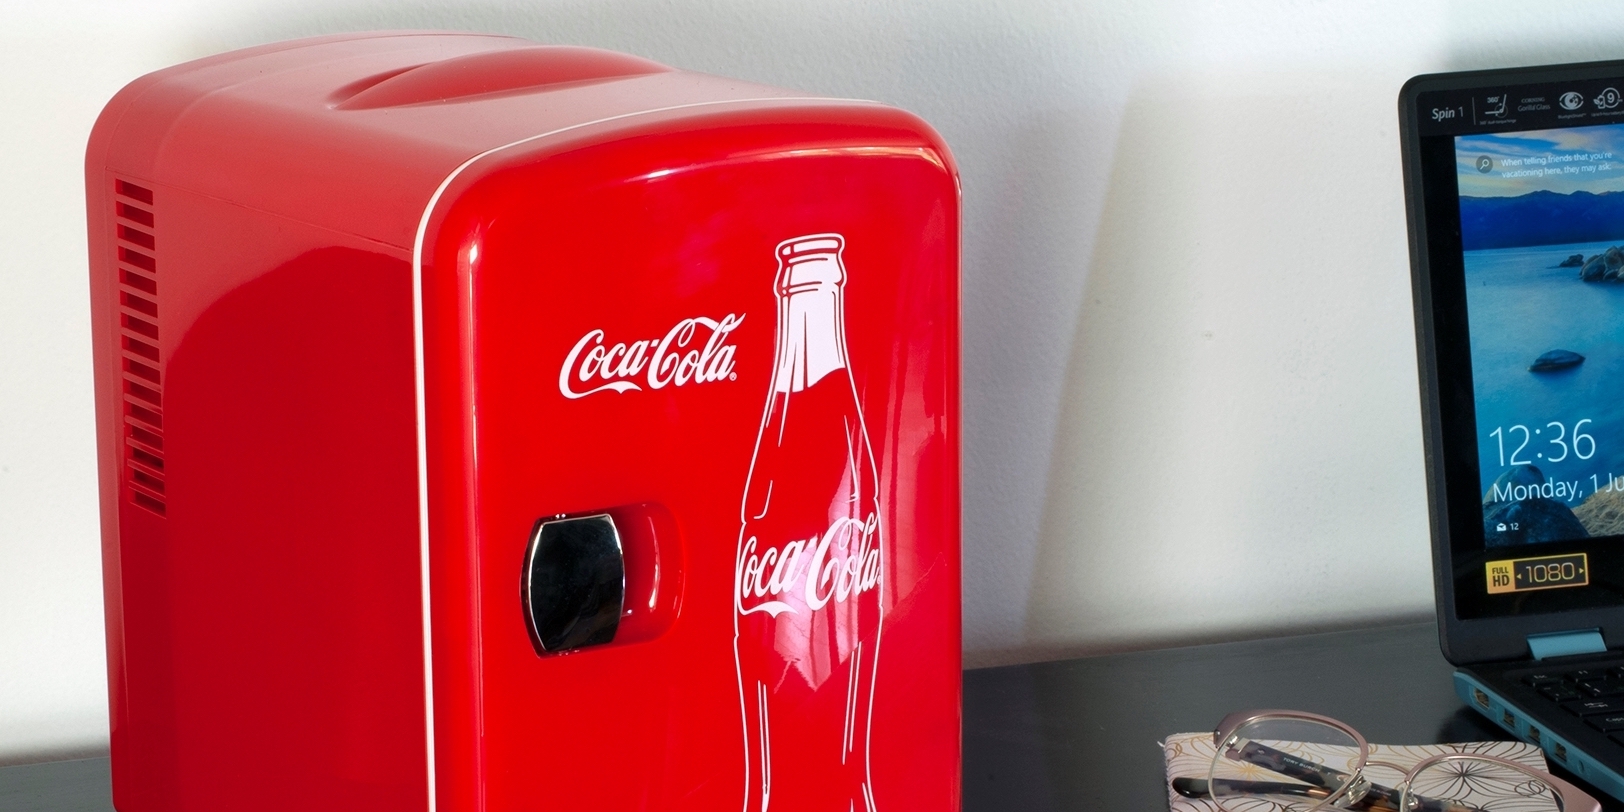 6 can coke mini fridge